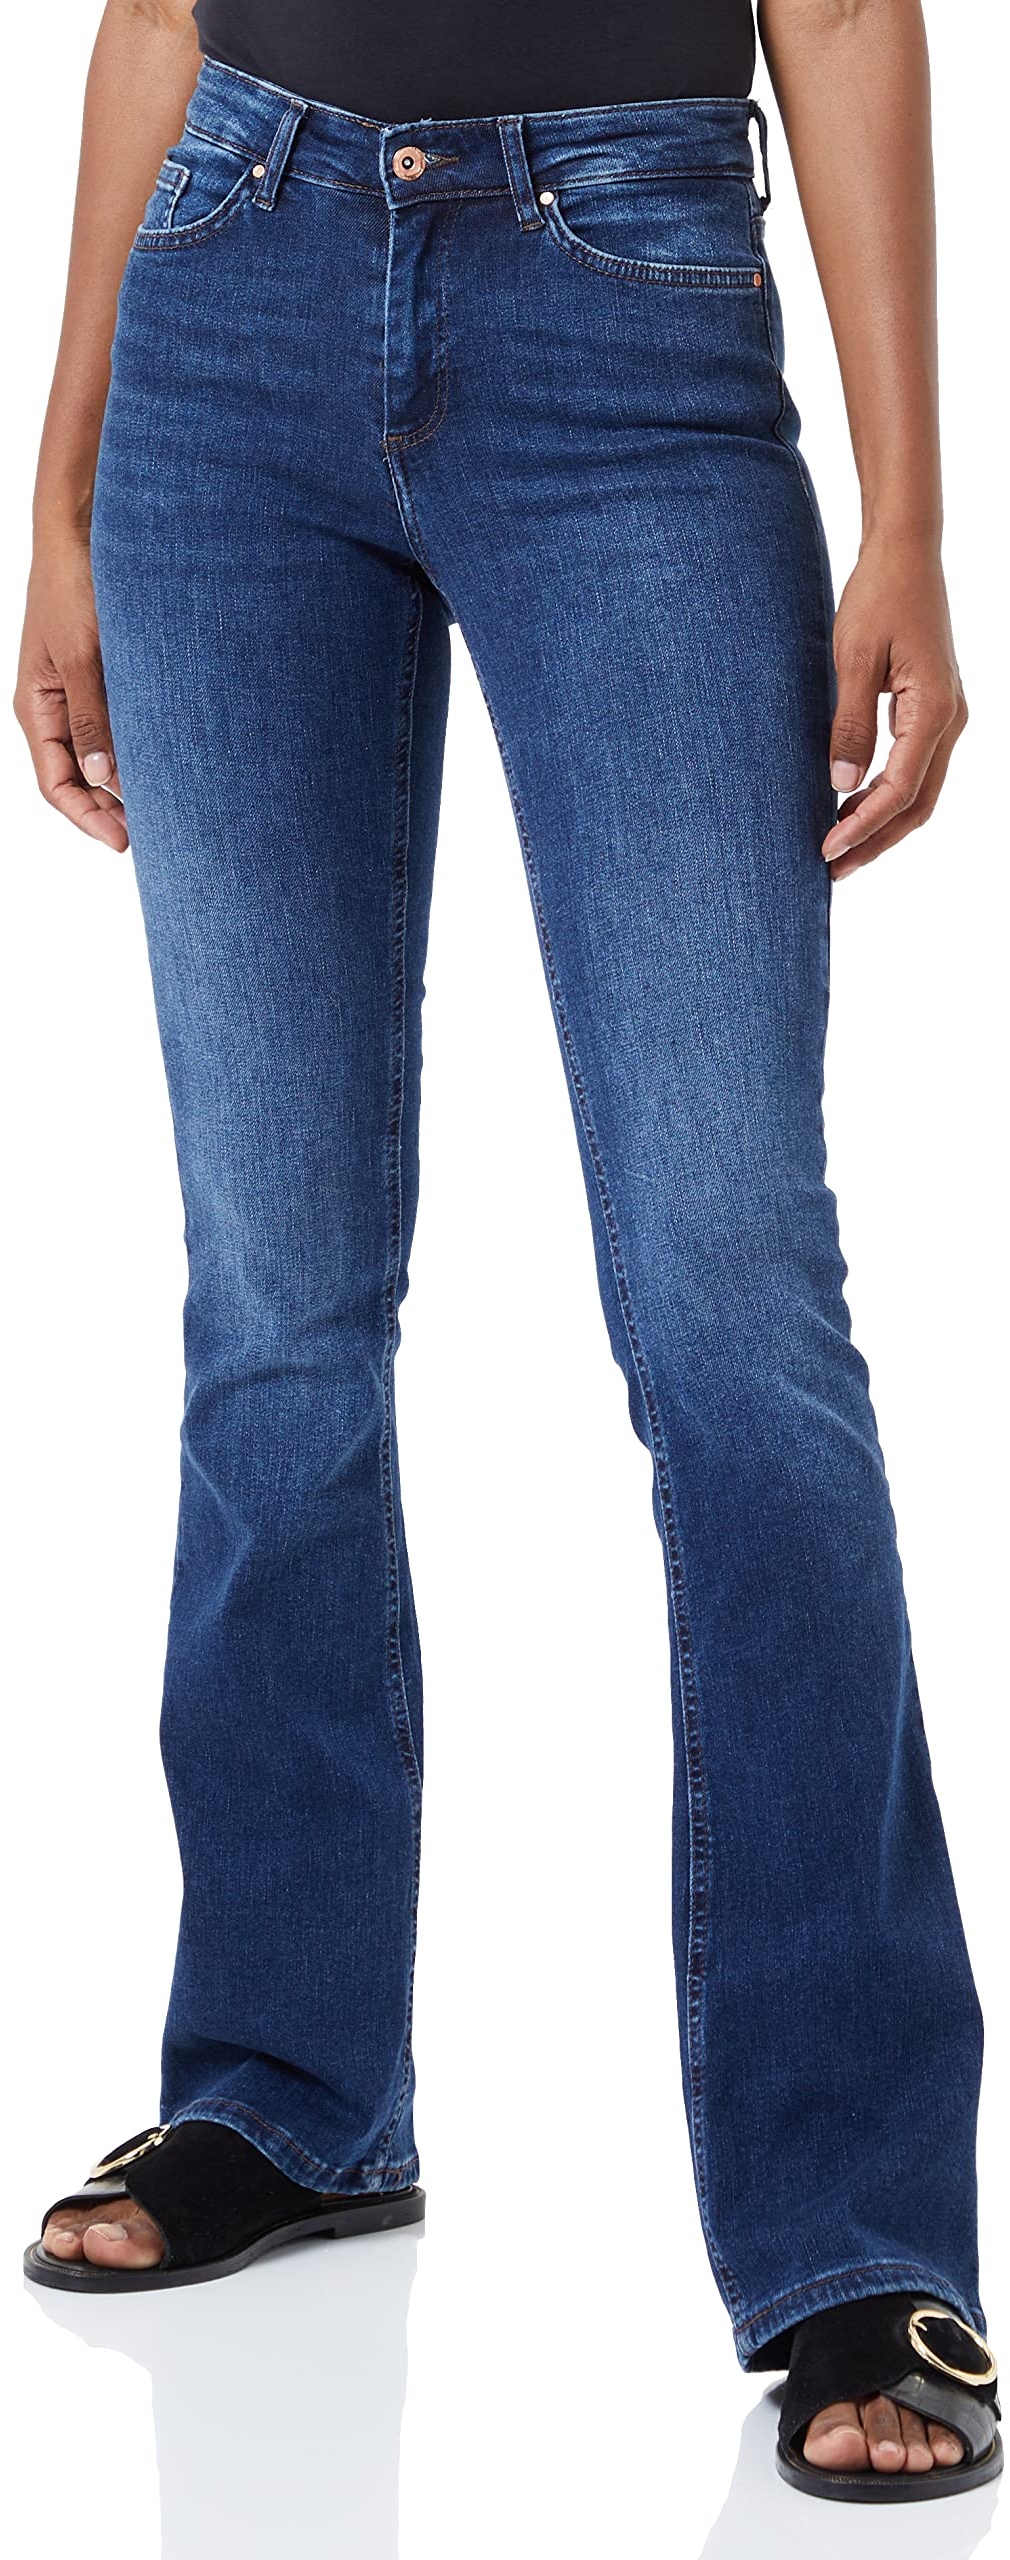 ONLY Damen Onlblush Mid flared Dnm Tai021 Noos Jeans, Dark Blue Denim, L / 30L EU